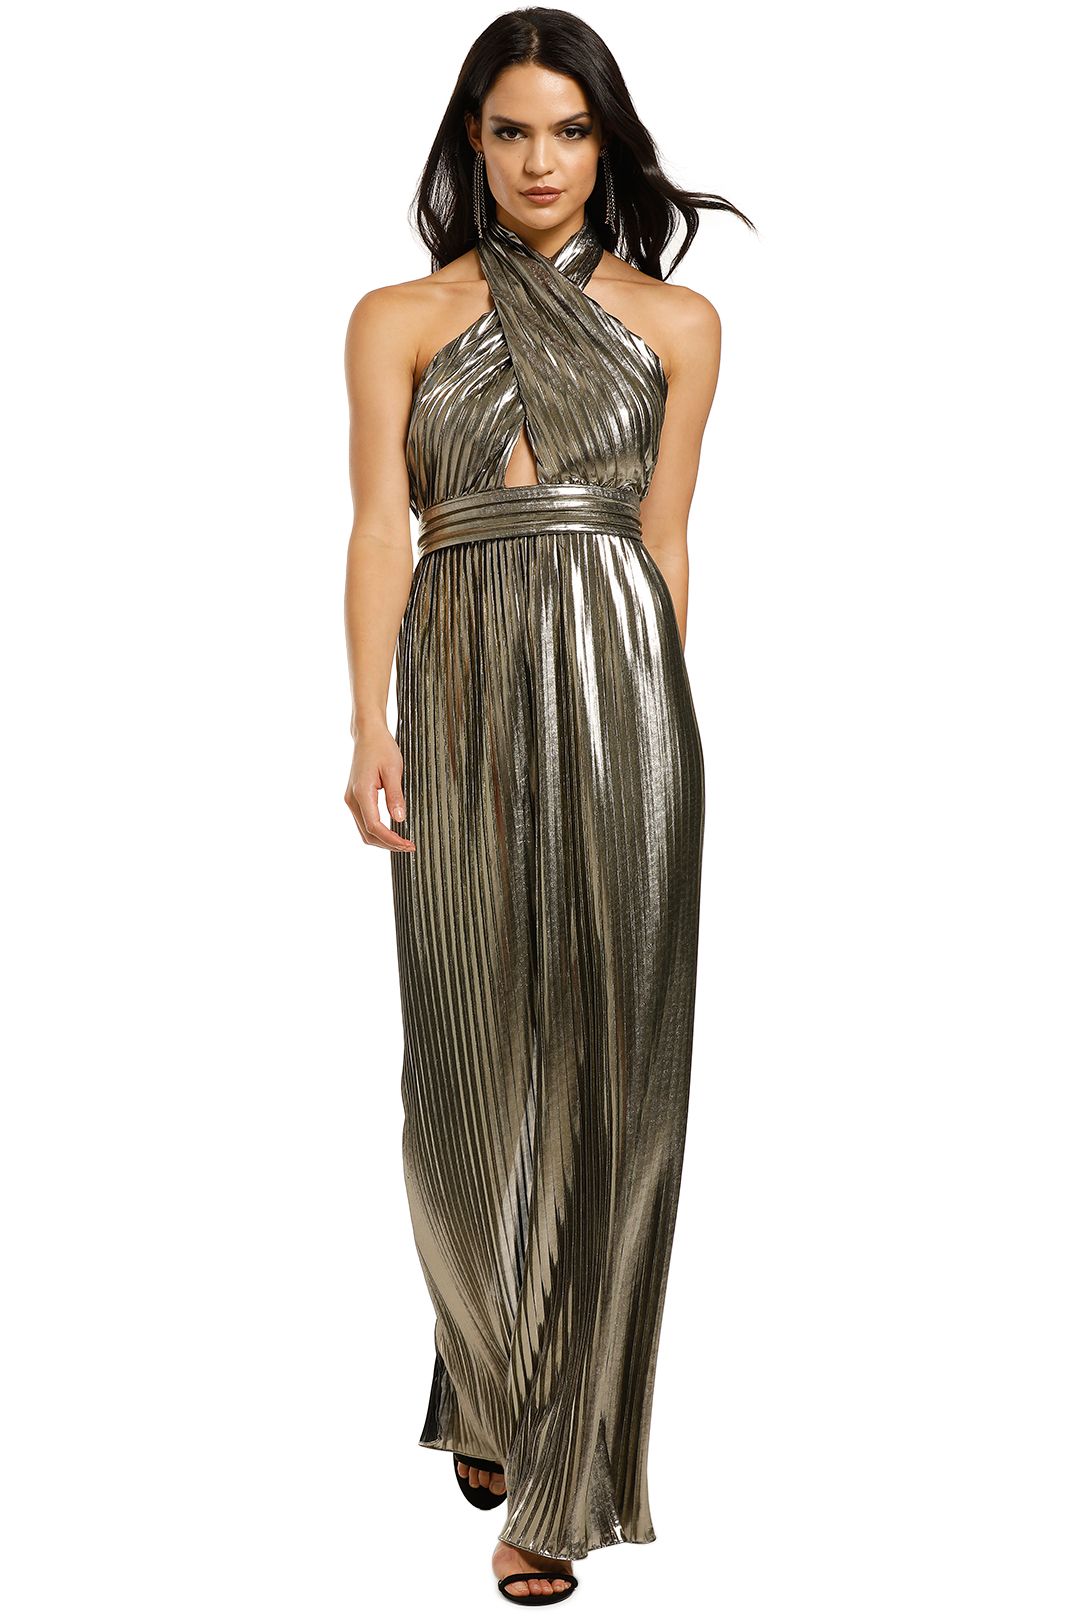 The Monroe Gold Gown by Carla Zampatti ...